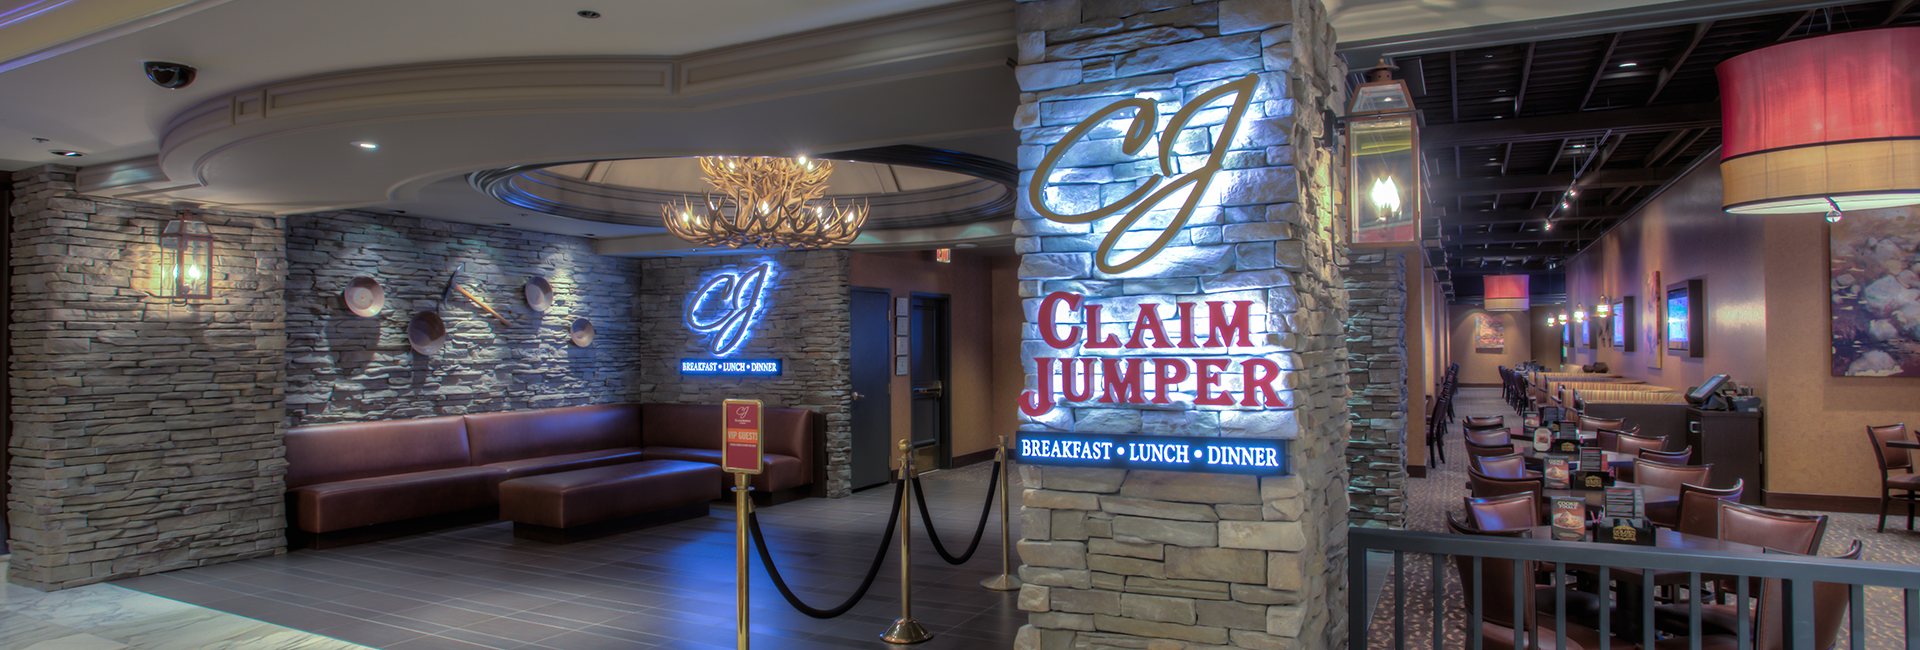 Claim Jumper Steakhouse & Bar - American Restaurant